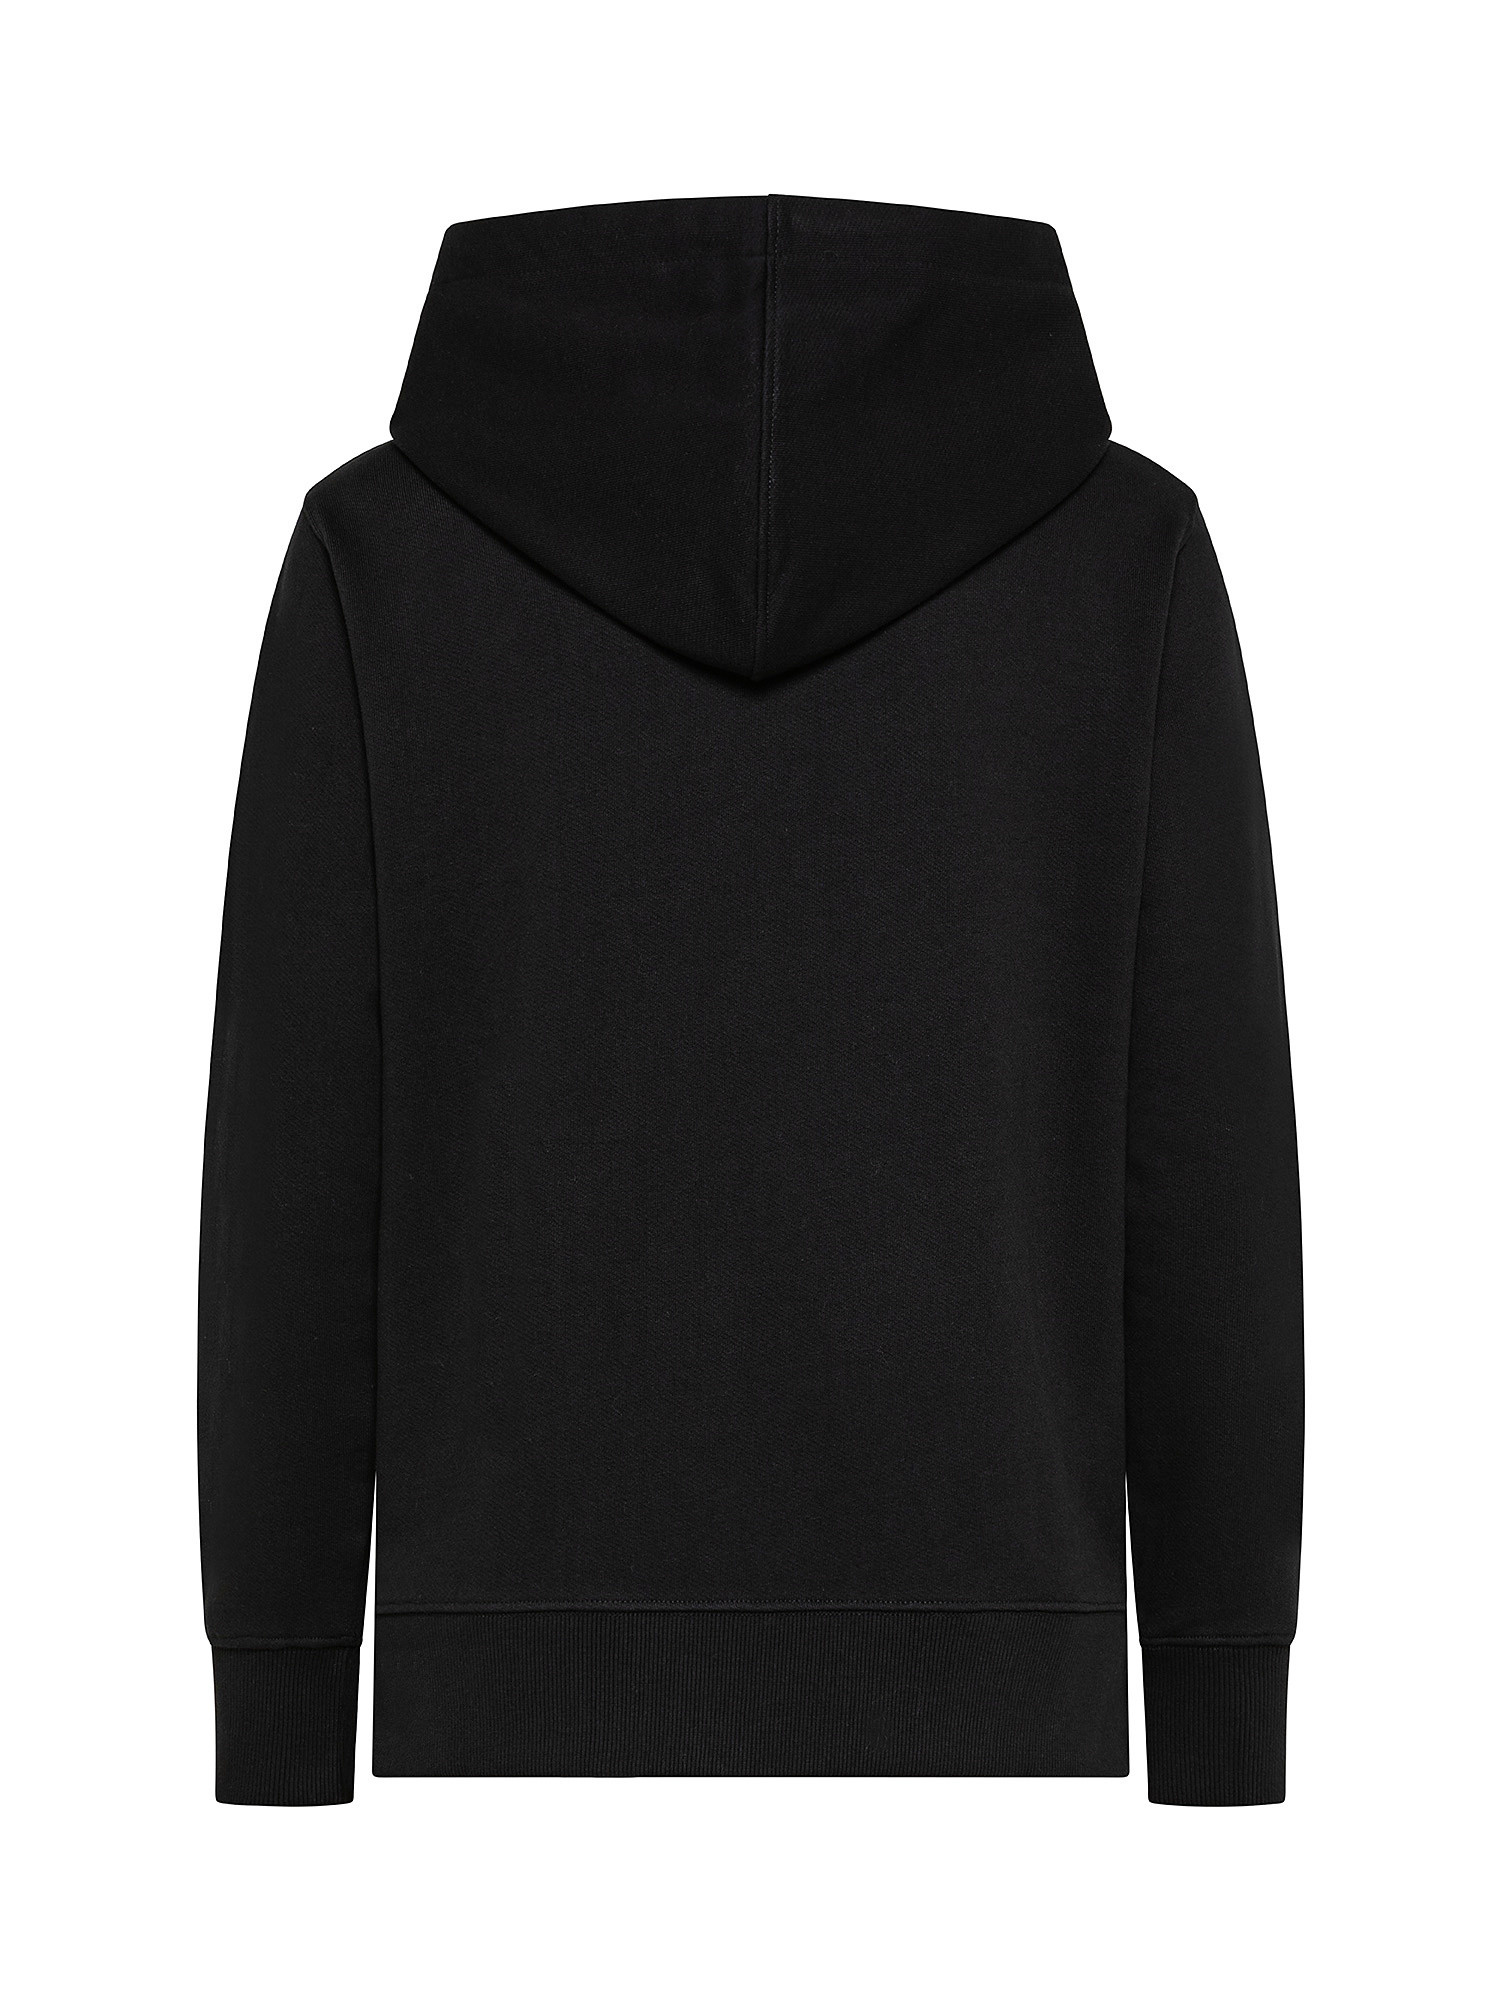 Calista zipper sports sweatshirt, Black, large image number 1